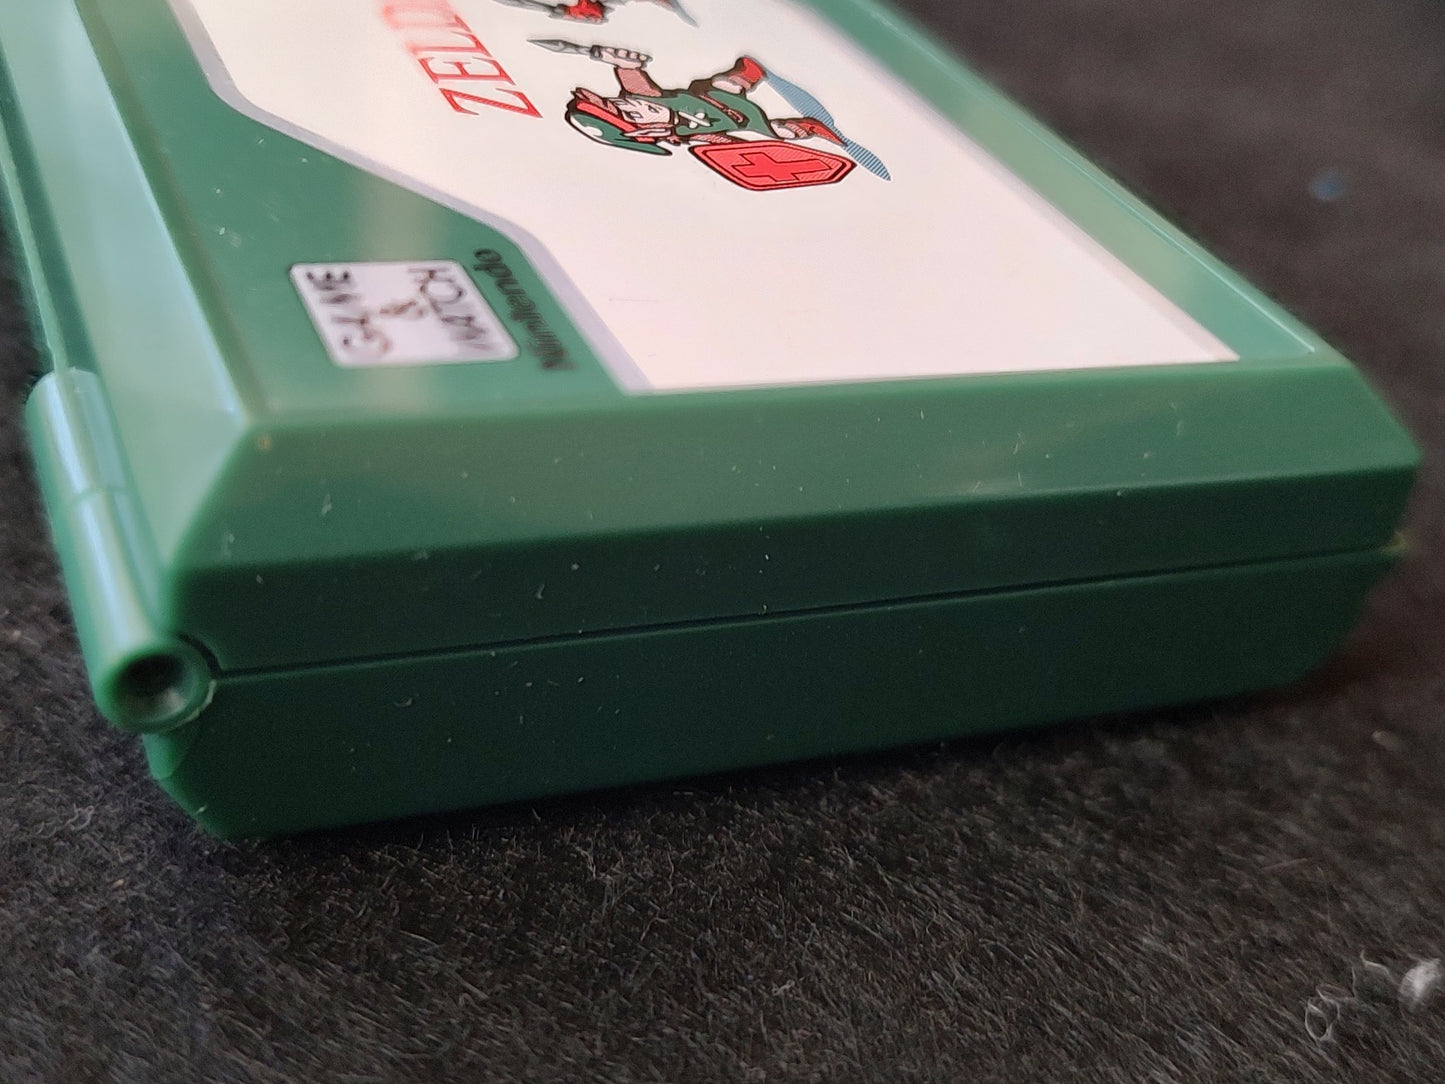 Vintage Nintendo Game & Watch Multi Screen the Legend of Zelda, Working-g0107-